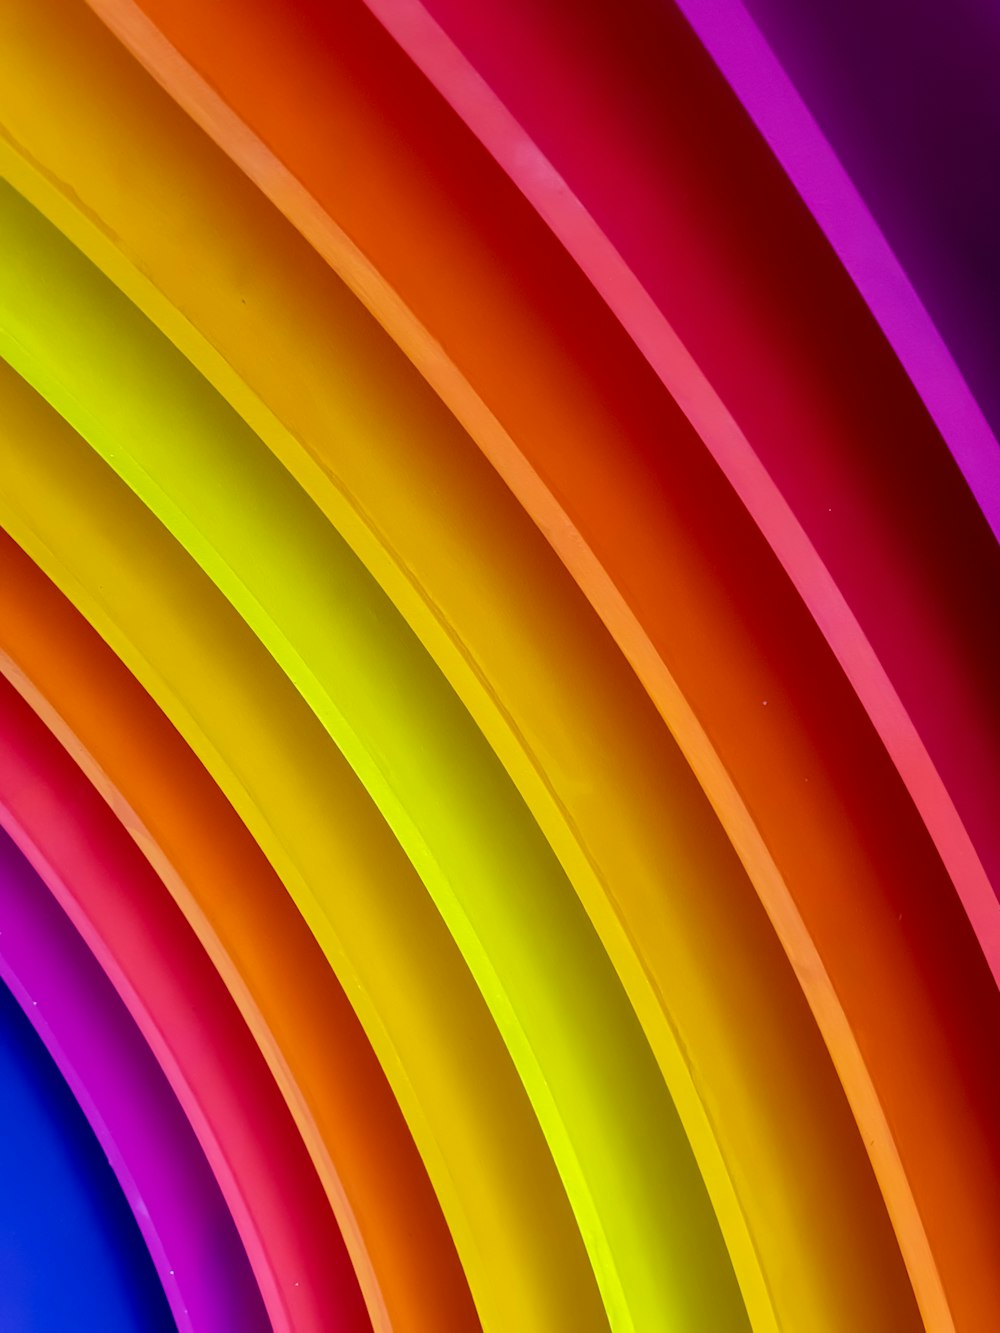 purple, red, and yellow rainbow column photo – Free Texture Image on  Unsplash